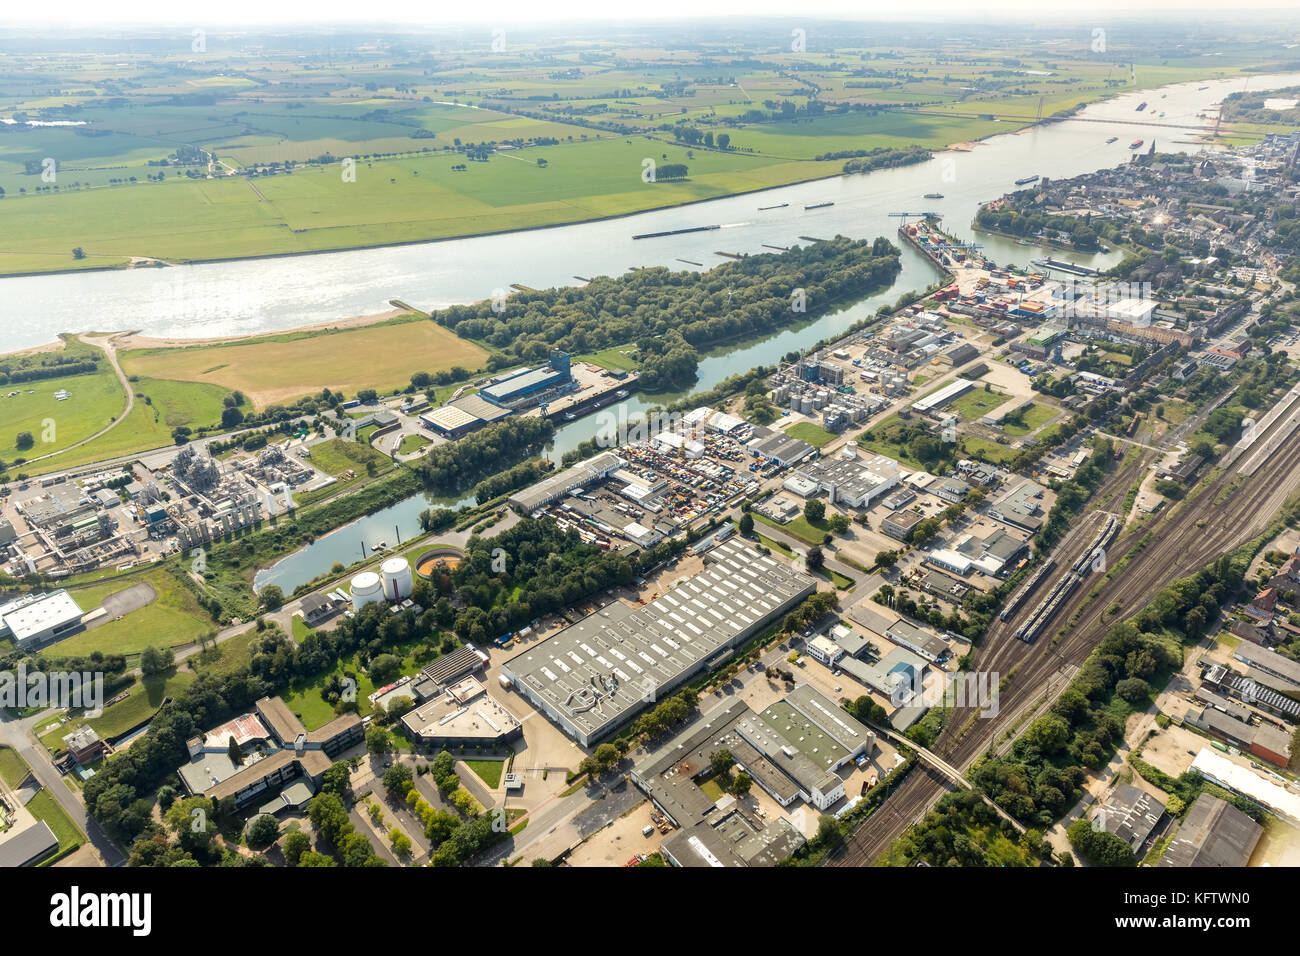 City Harbor Emmerich, river port on the Rhine, Port Emmerich, Lower Rhine, North Rhine-Westphalia, Germany, Emmerich, Europe, Aerial View, Aerial, aer Stock Photo